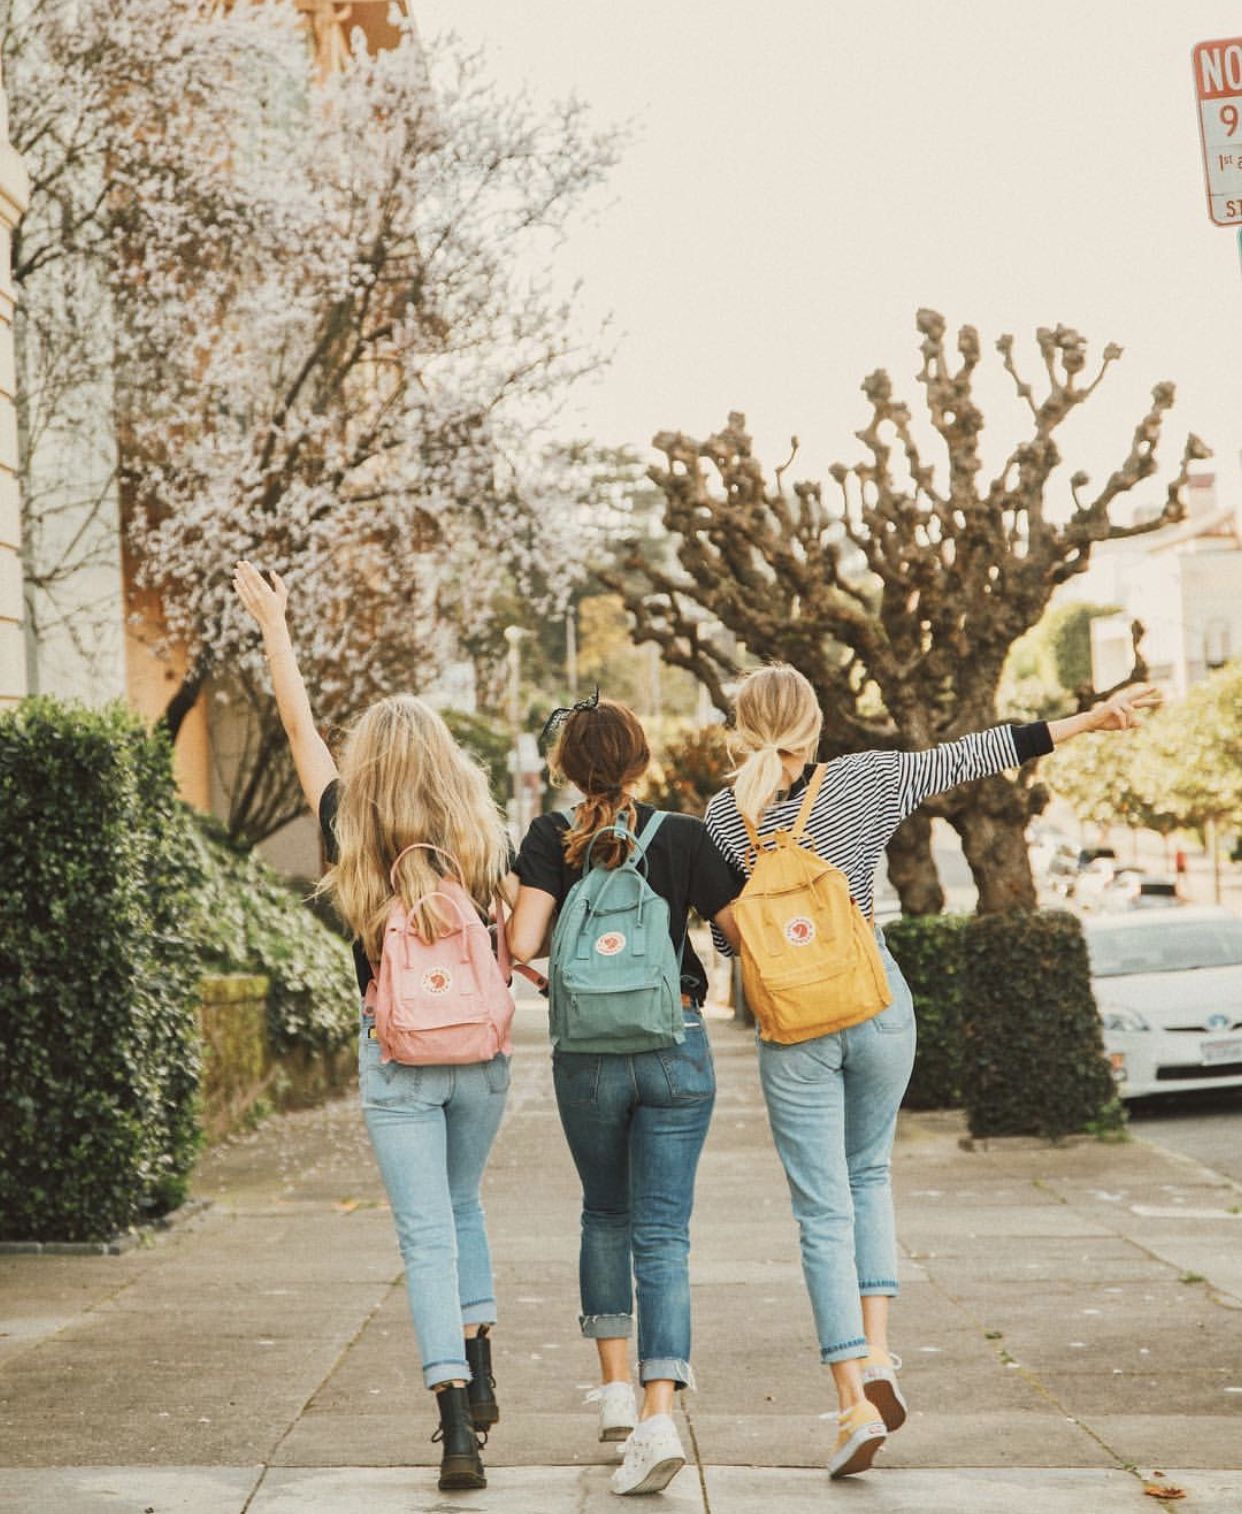 Где девочки гуляют. Эстетика прогулки с друзьями. Друзья на прогулке. Гулять с друзьями Эстетика. Подруги гуляют.